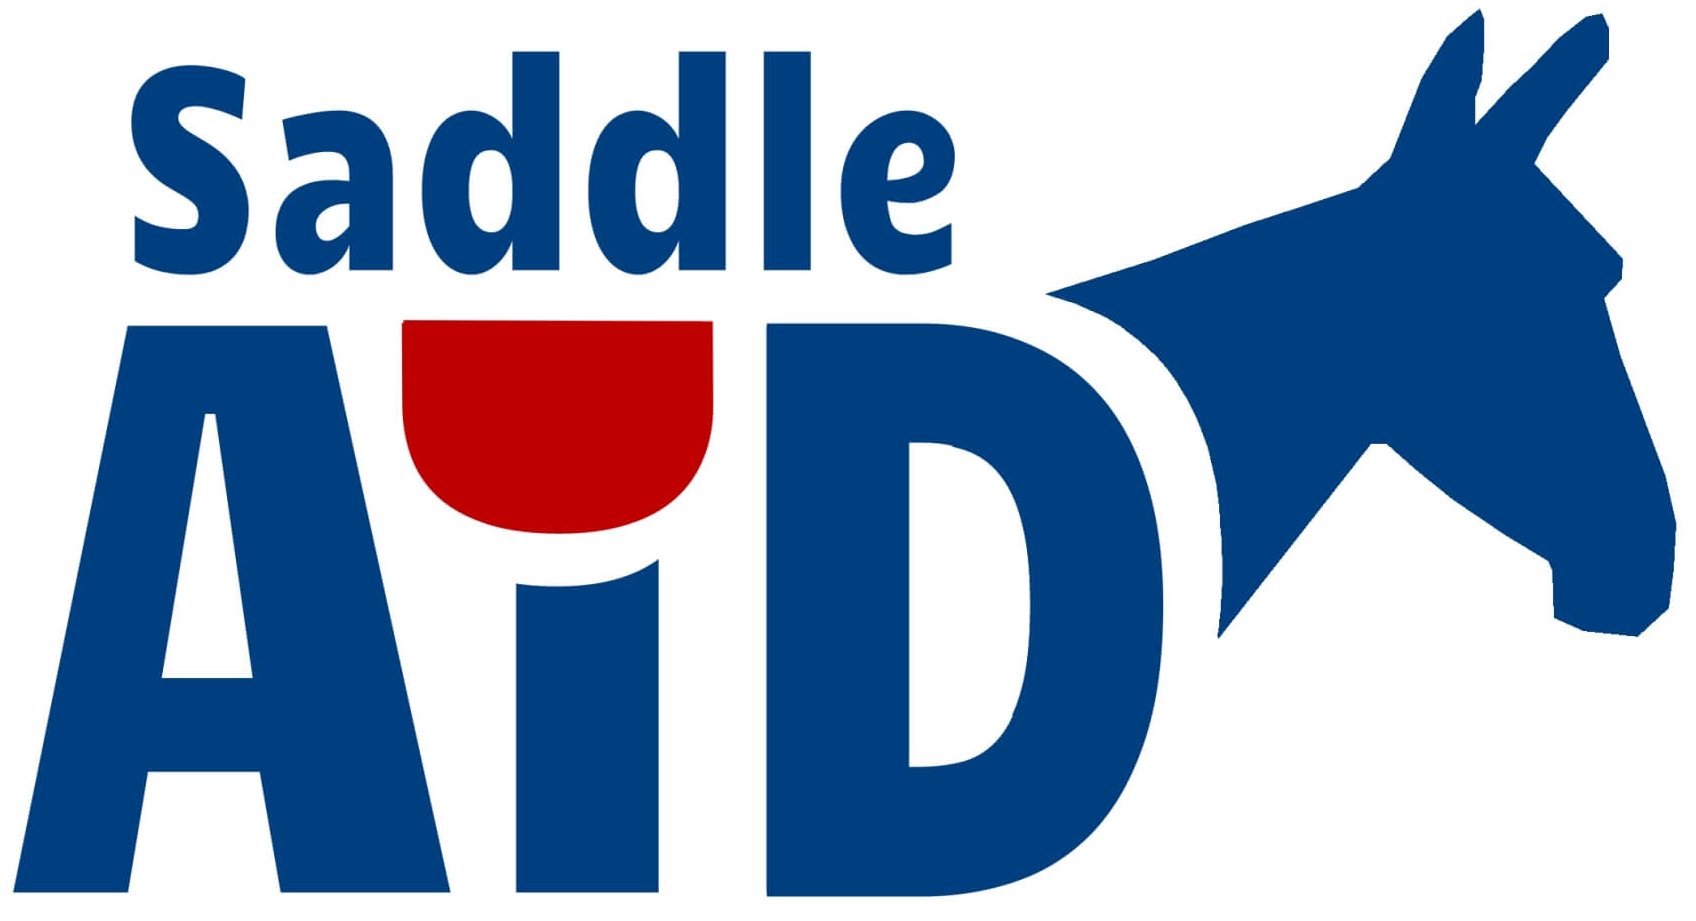 SaddleAid Logo  large (002).jpg